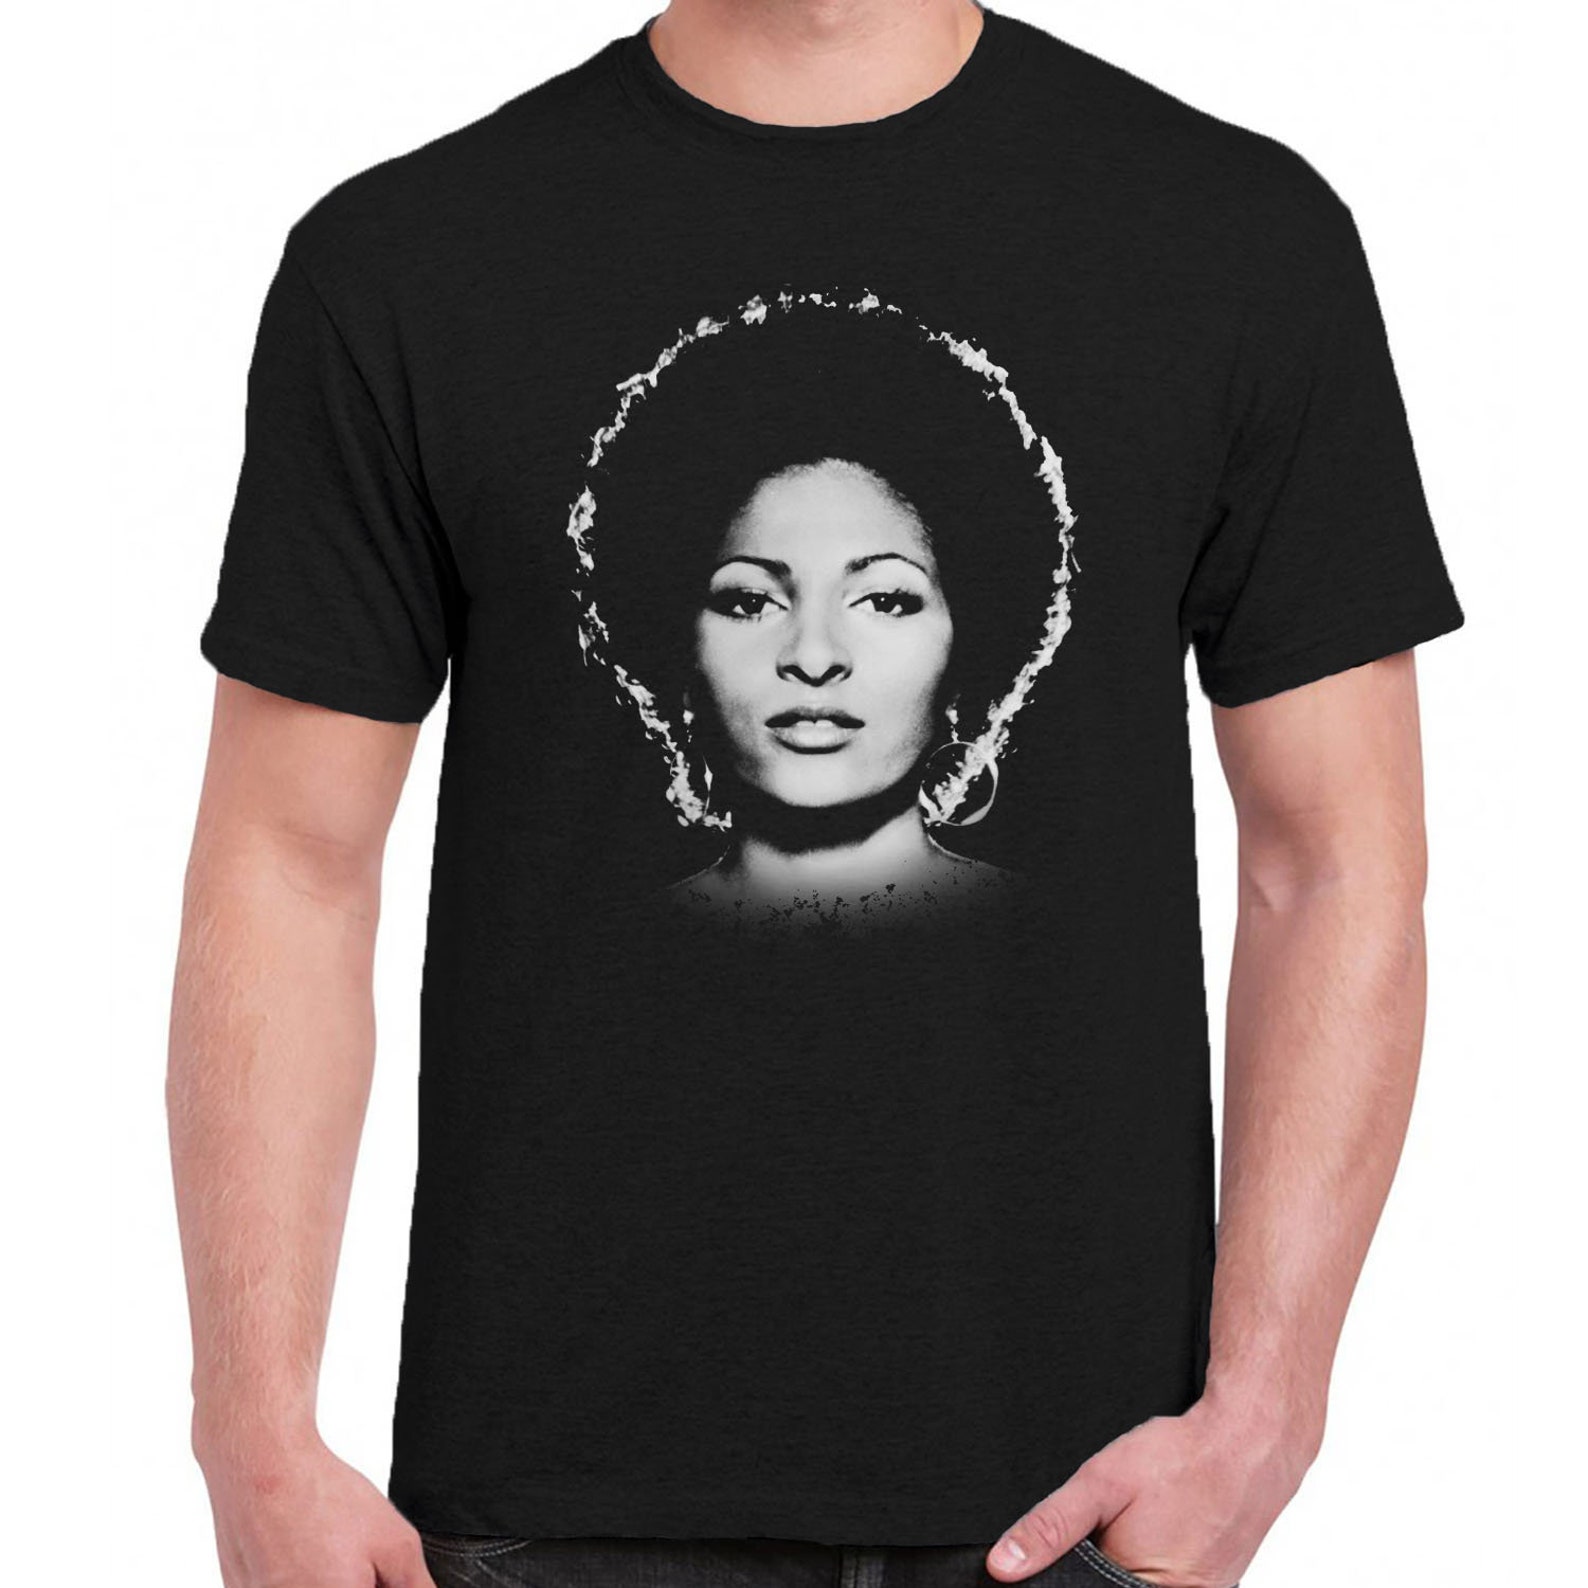 Pam Grier T-shirt Men Black Cotton Tee S to 5XL | Etsy